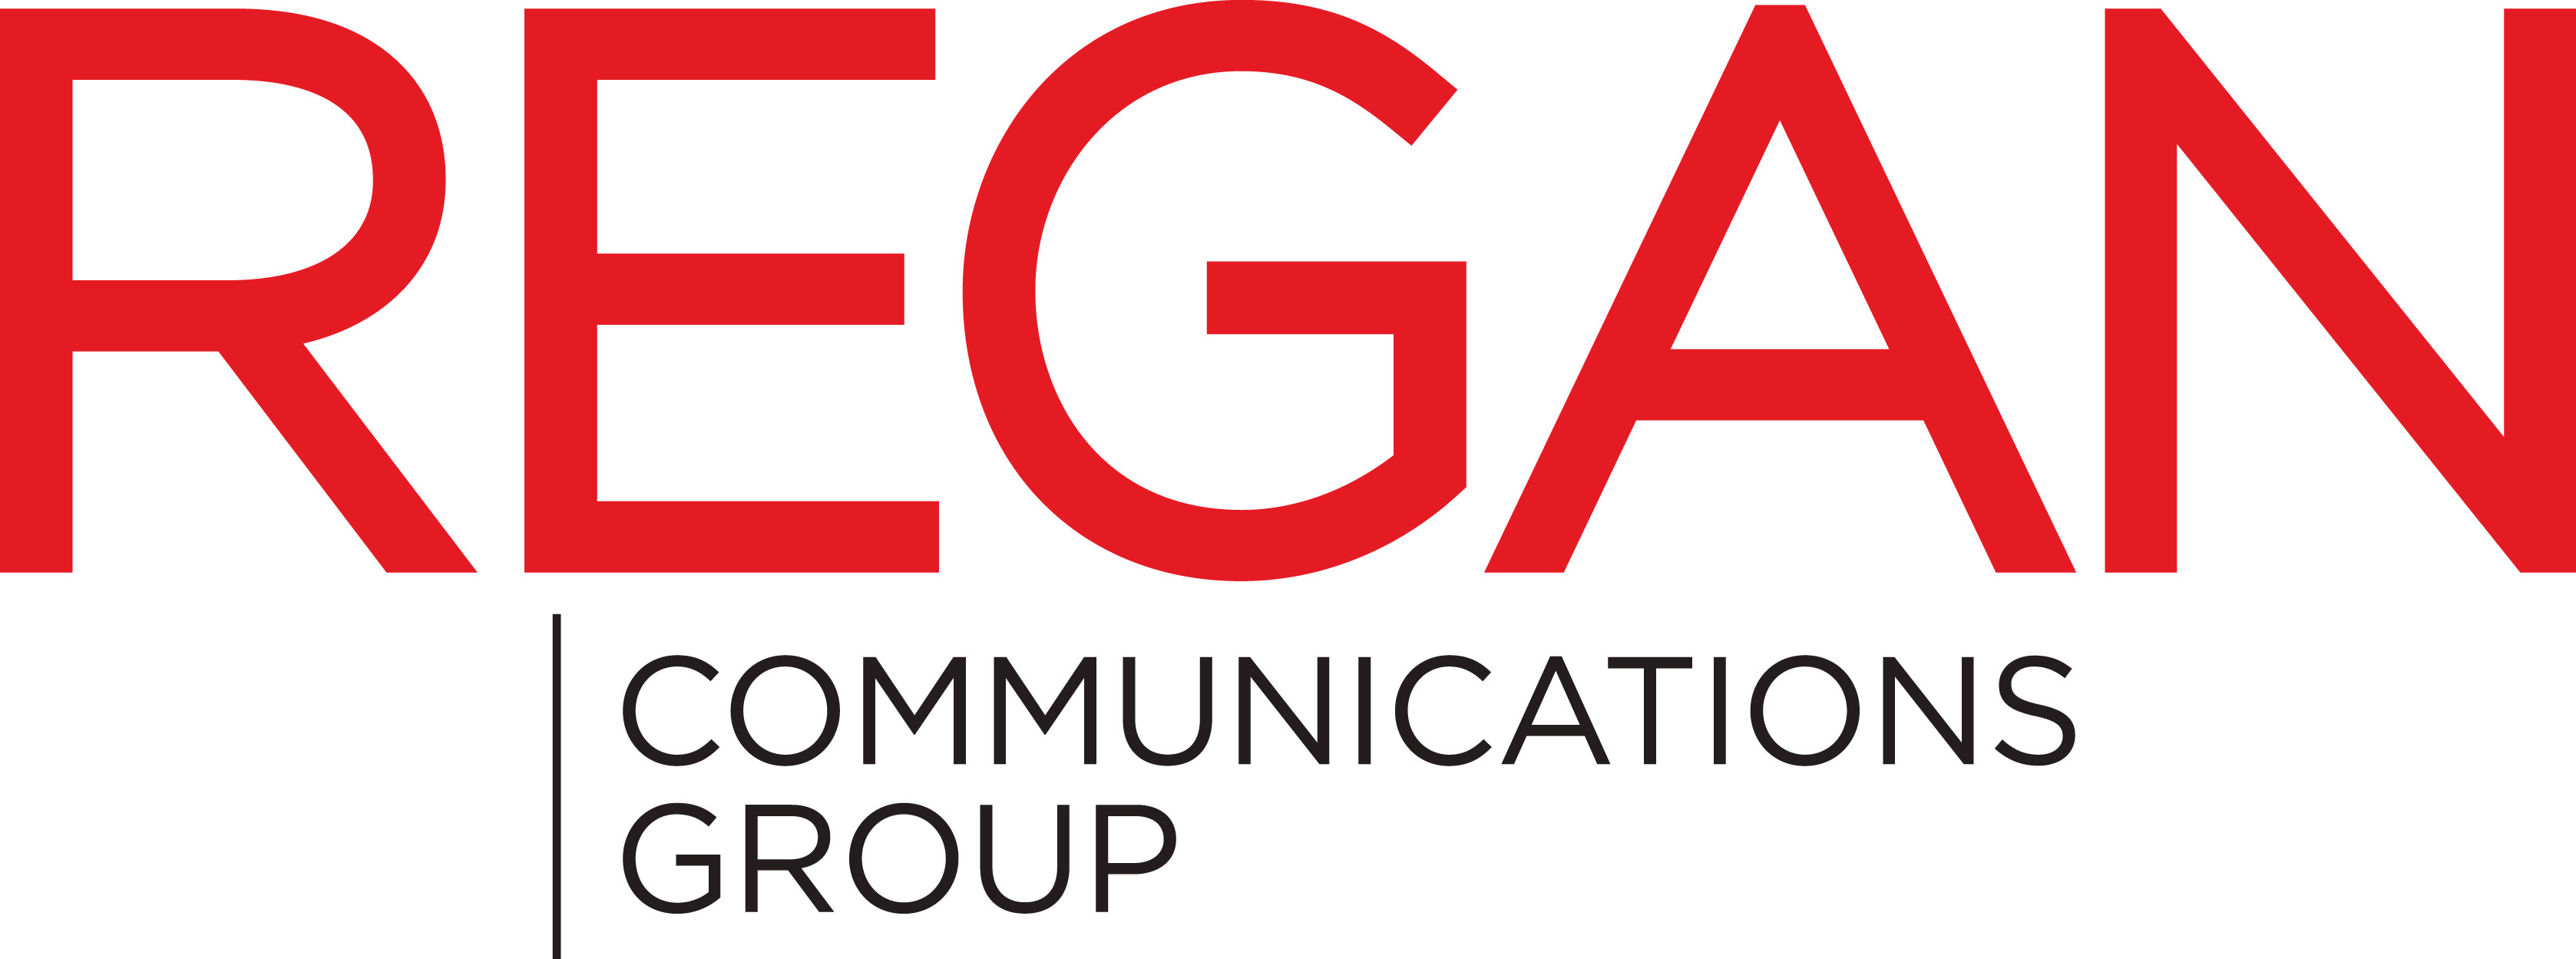  Best Public Relations Business Logo: Regan Communications Group